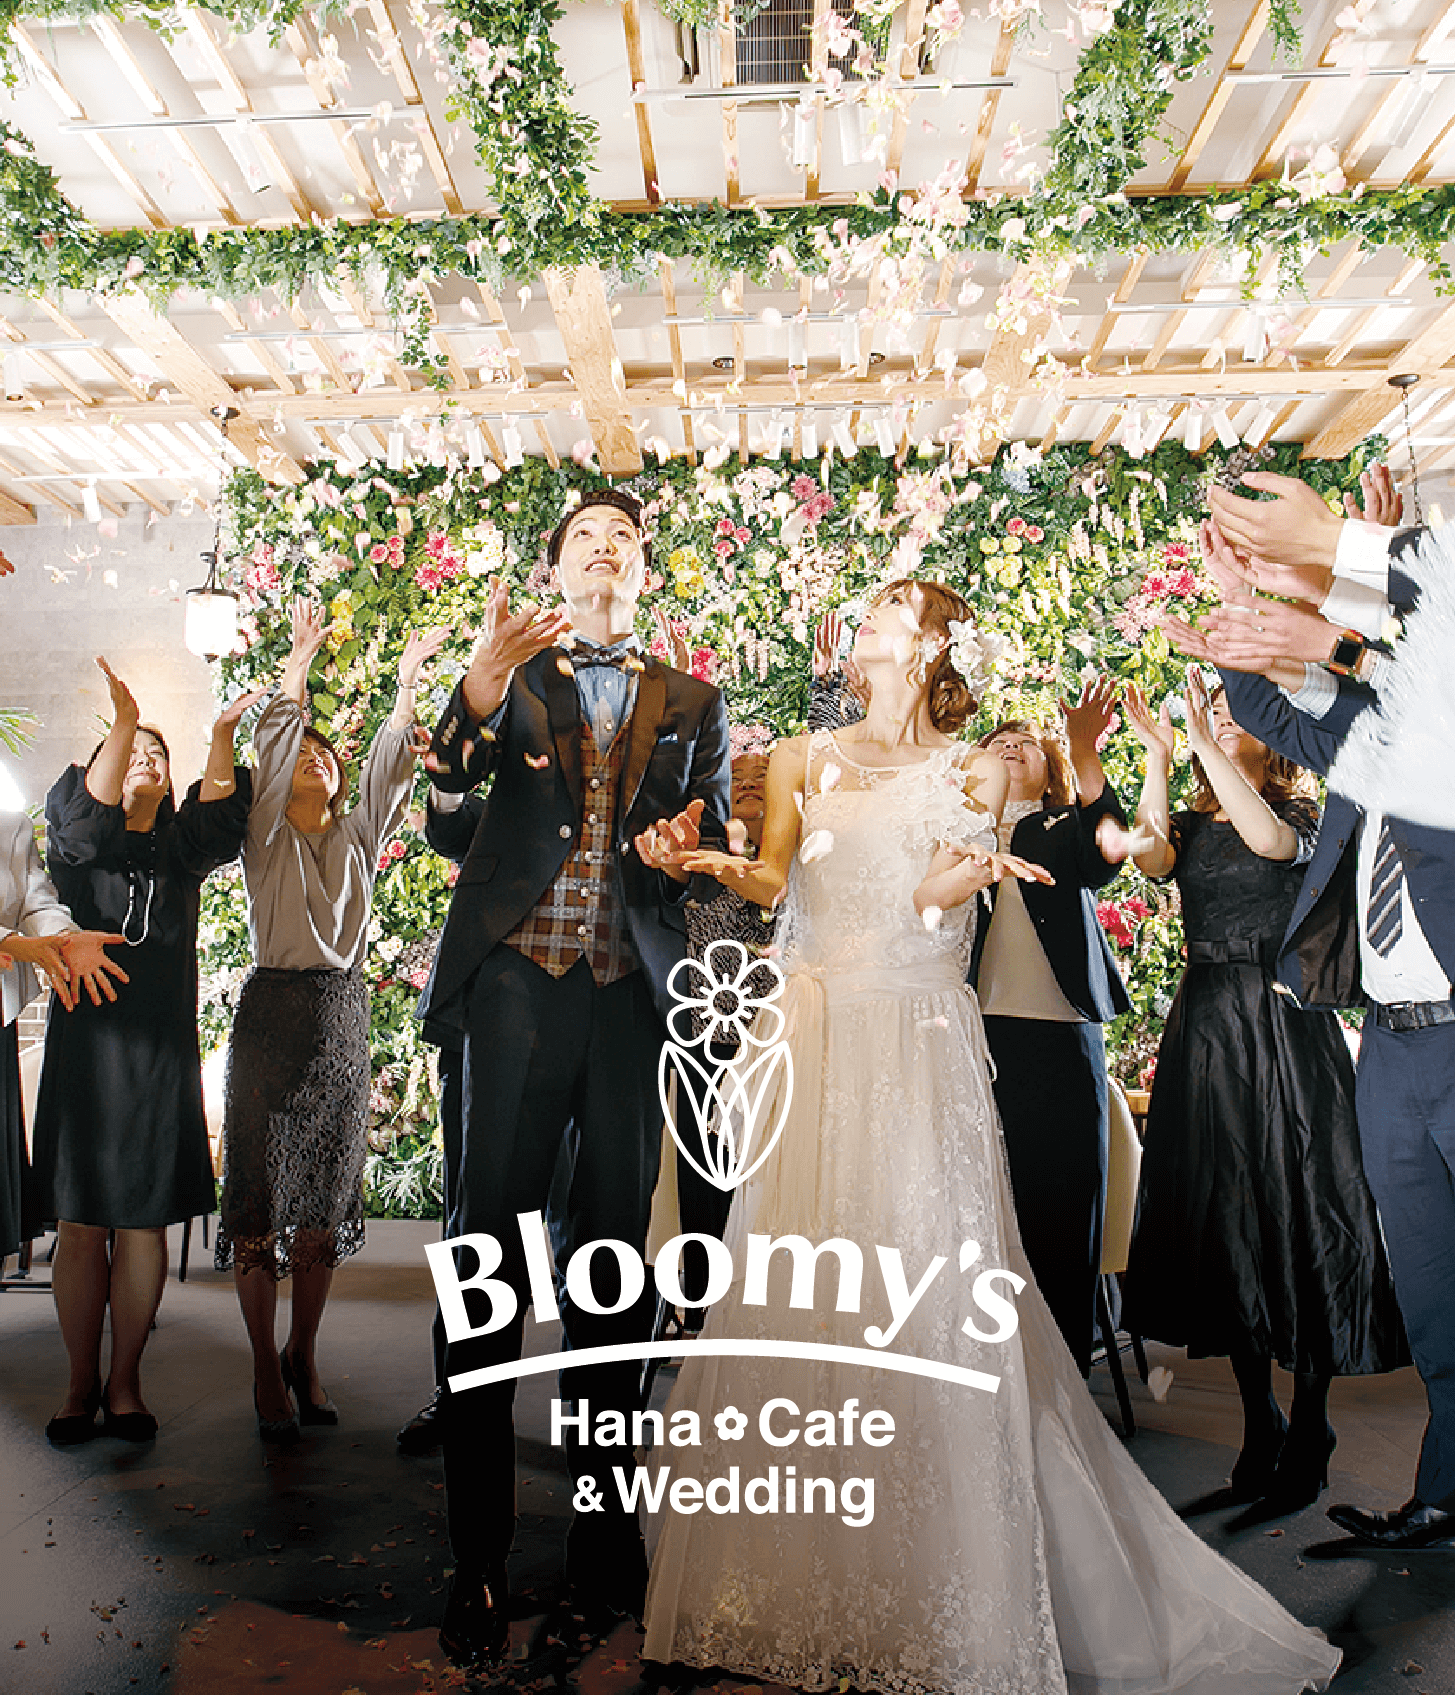 Bloomy's Hana/Cafe & Wedding